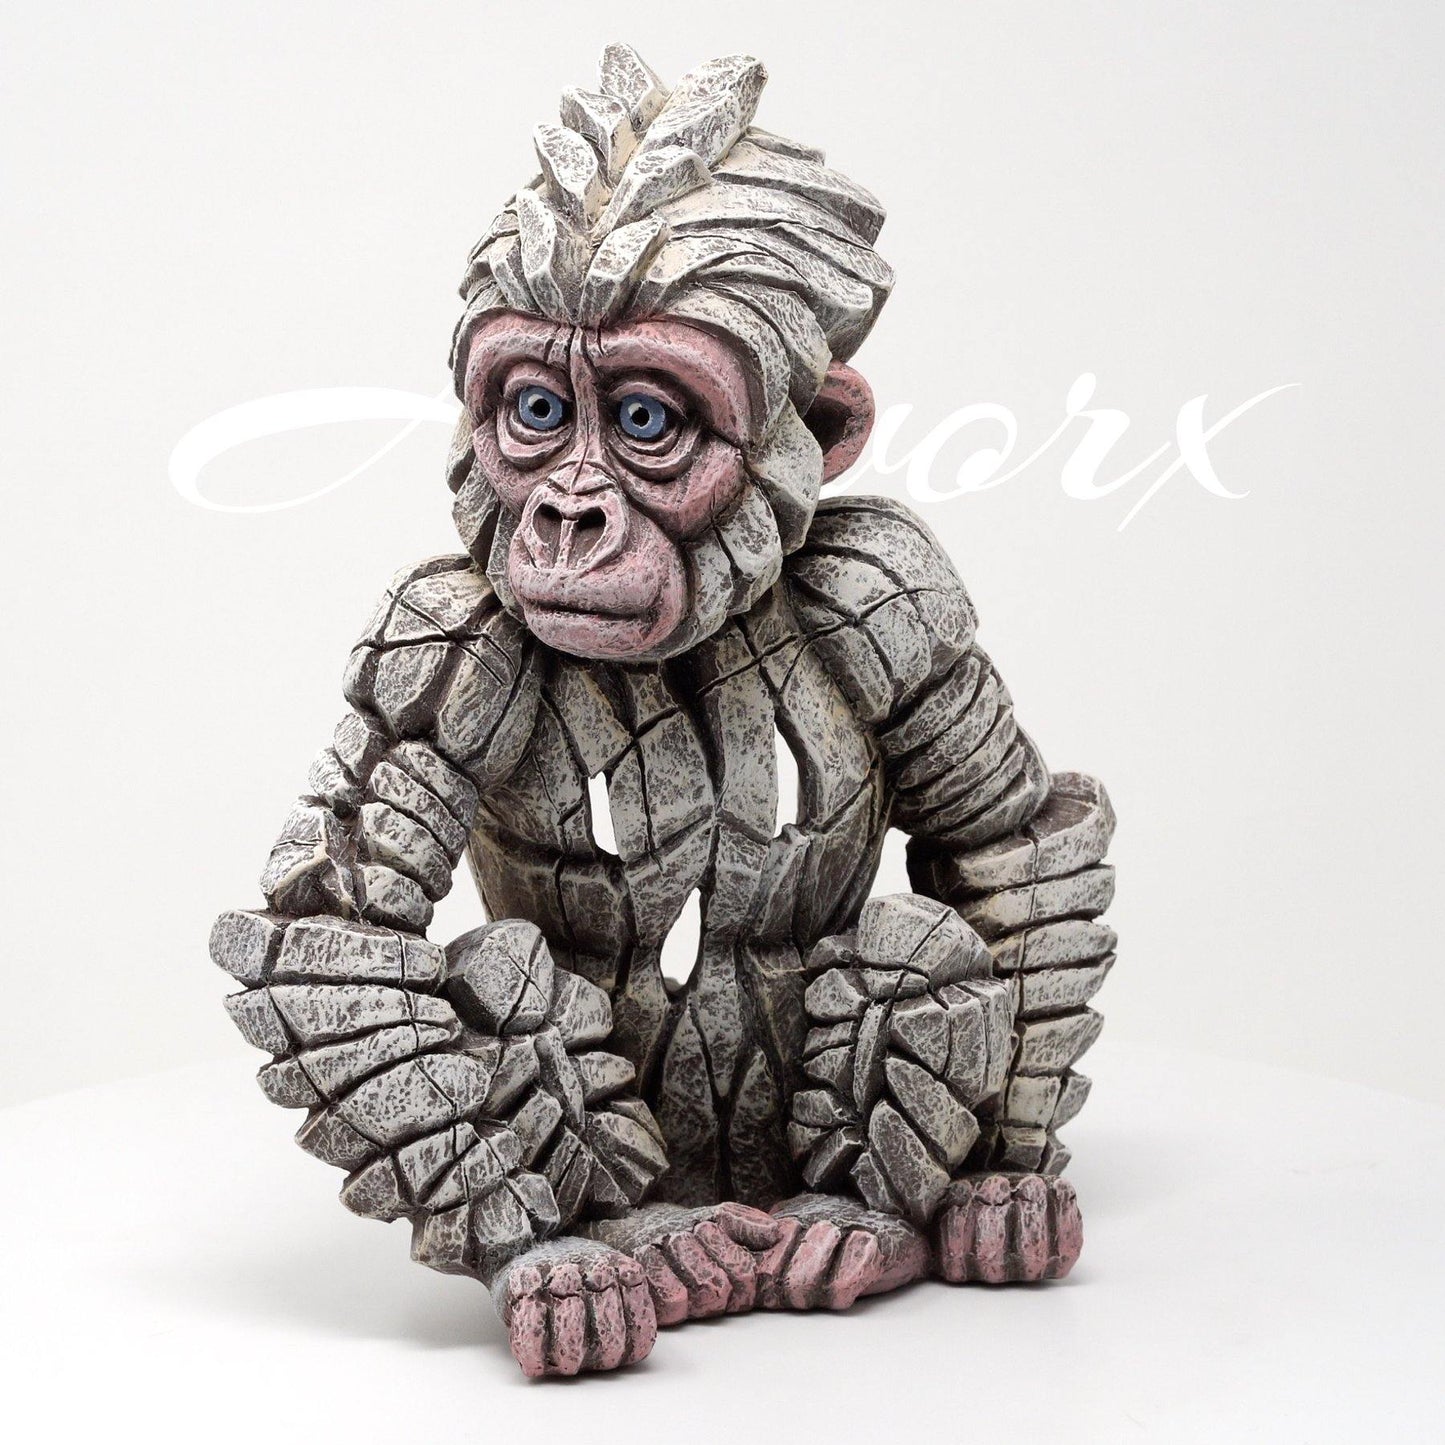 Snowflake Baby Gorilla Sculpture (Edge Sculpture by Matt Buckley) - Gallery Gifts Online 